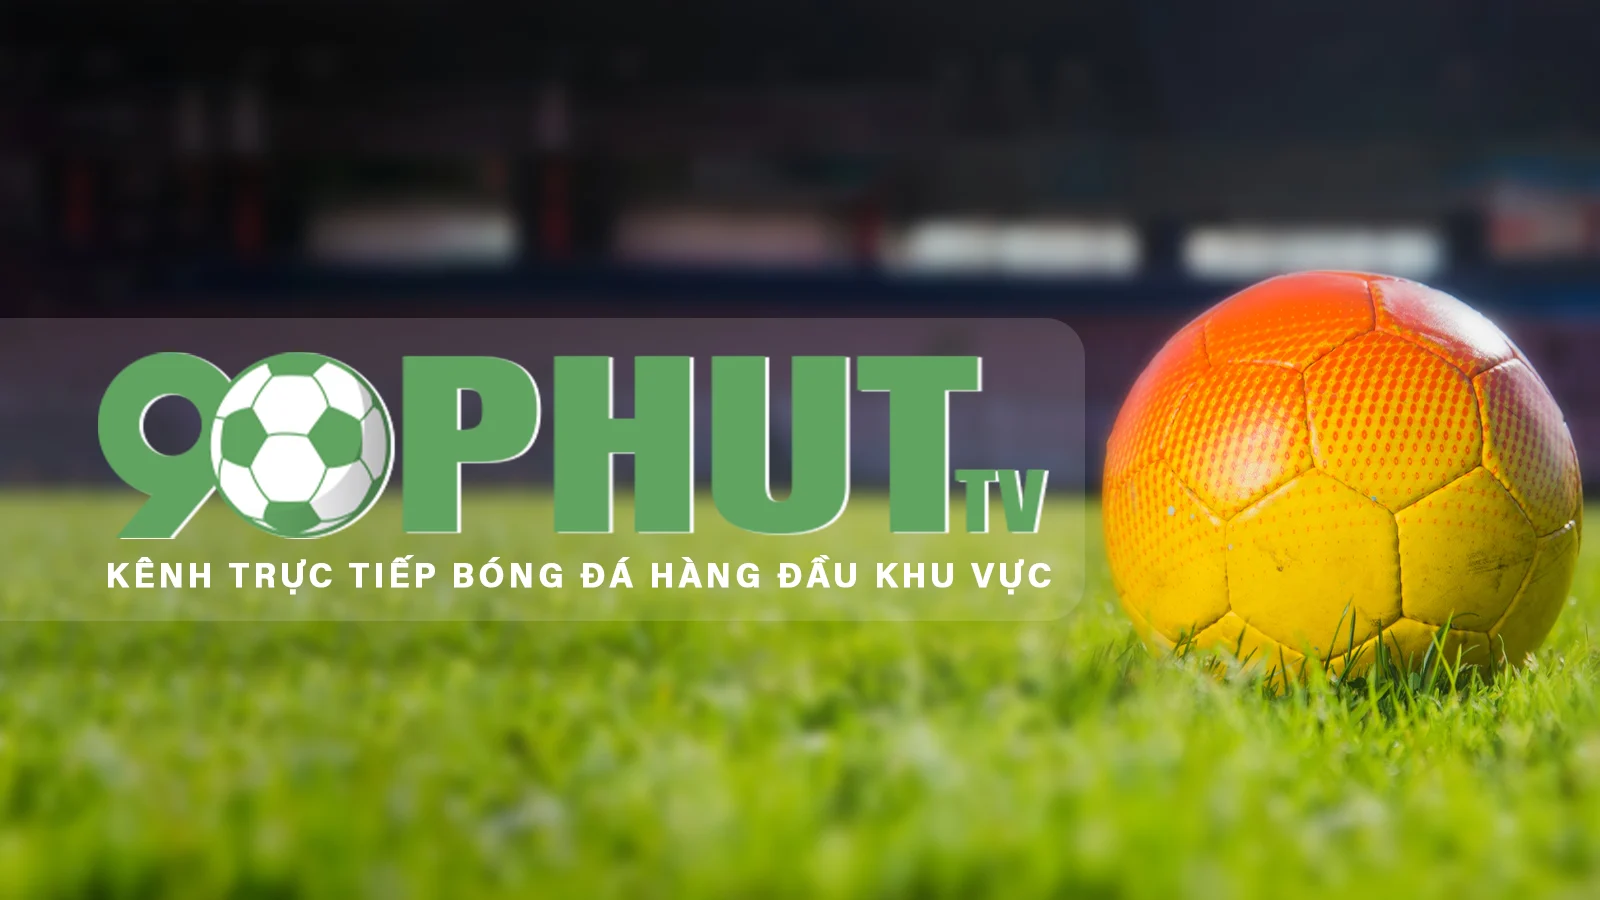 Chia sẻ về 90 Phut TV